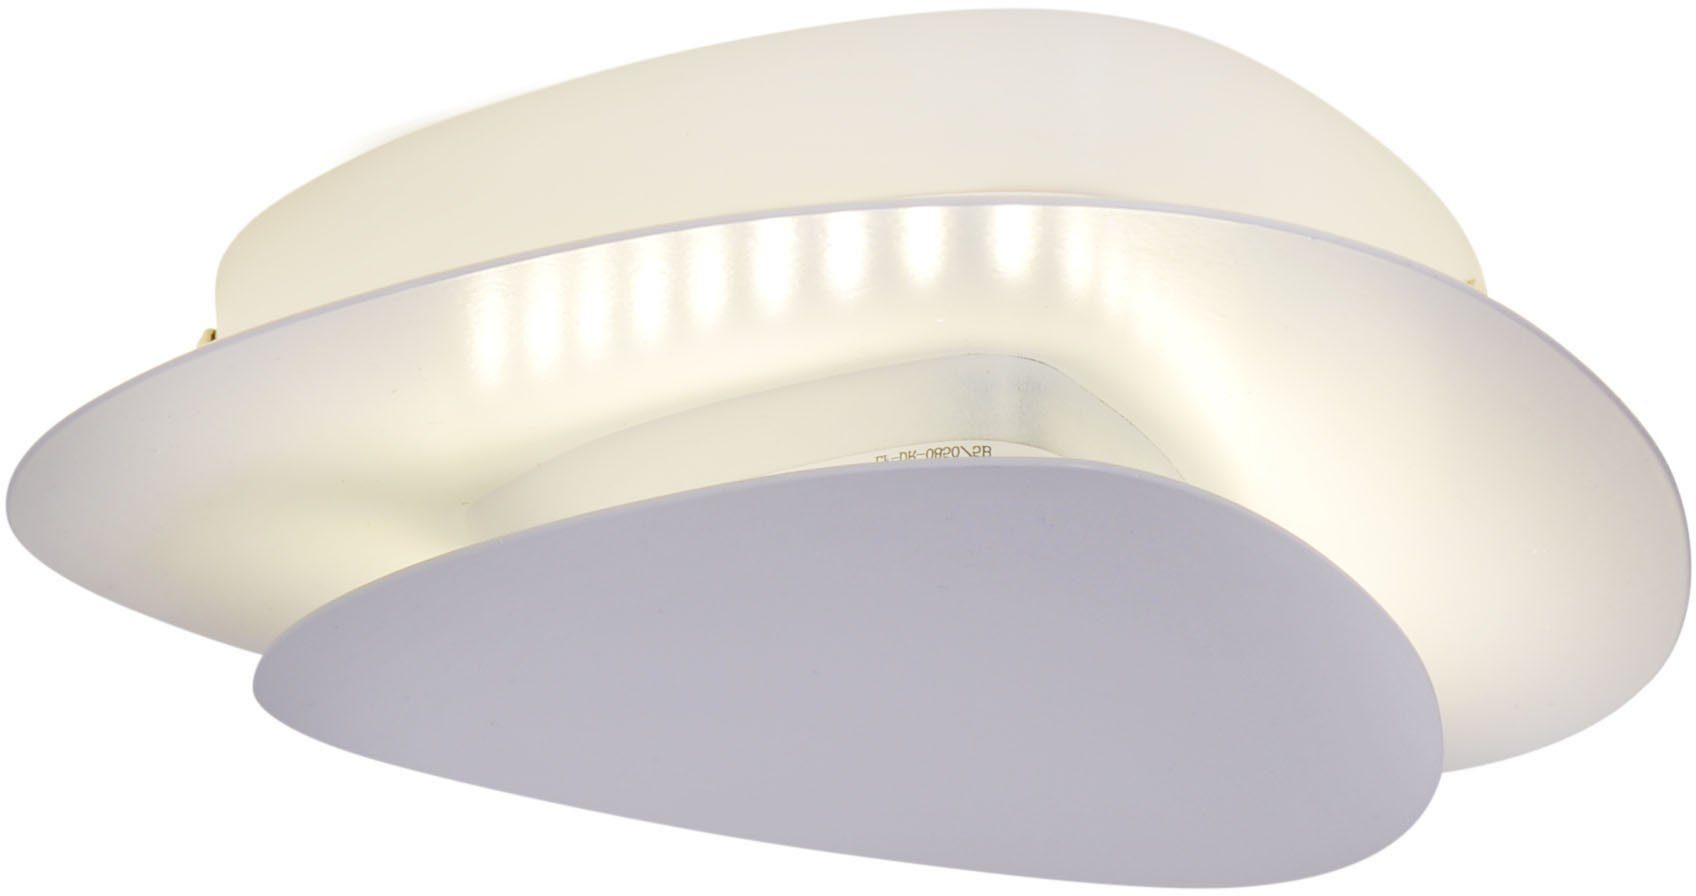 LED Farbe: Material: Metall, G, integriert, Deckenleuchte Liso, LED fest Warmweiß, Energieeffizienzklasse incl. näve weiß Treiber,